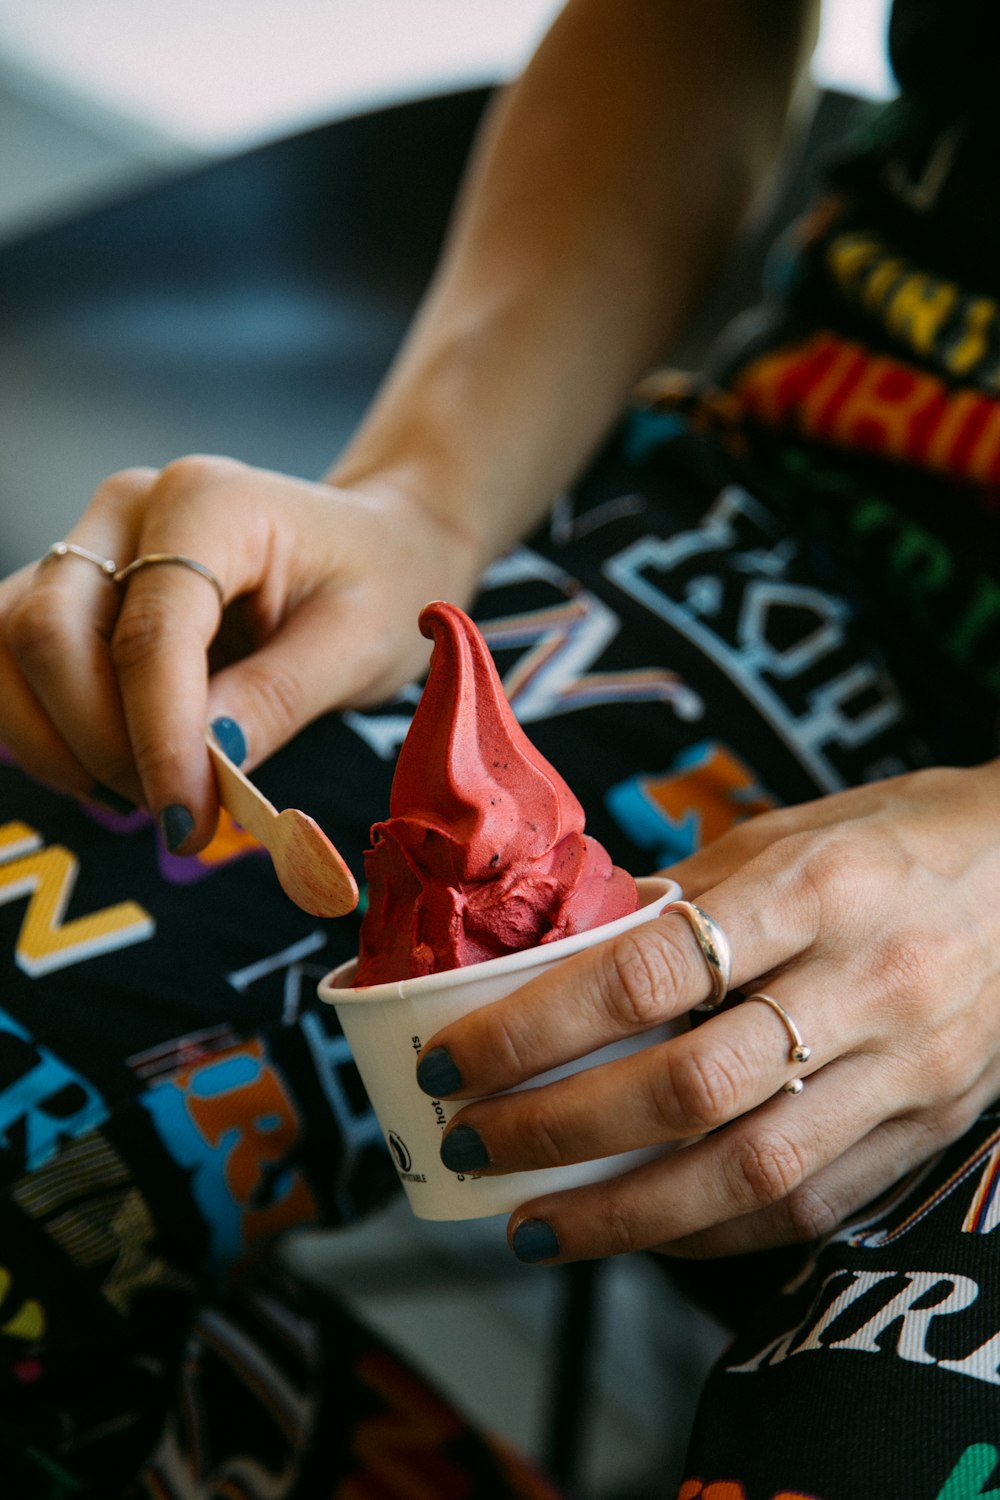 Una donna tiene in mano una ciotola di gelato